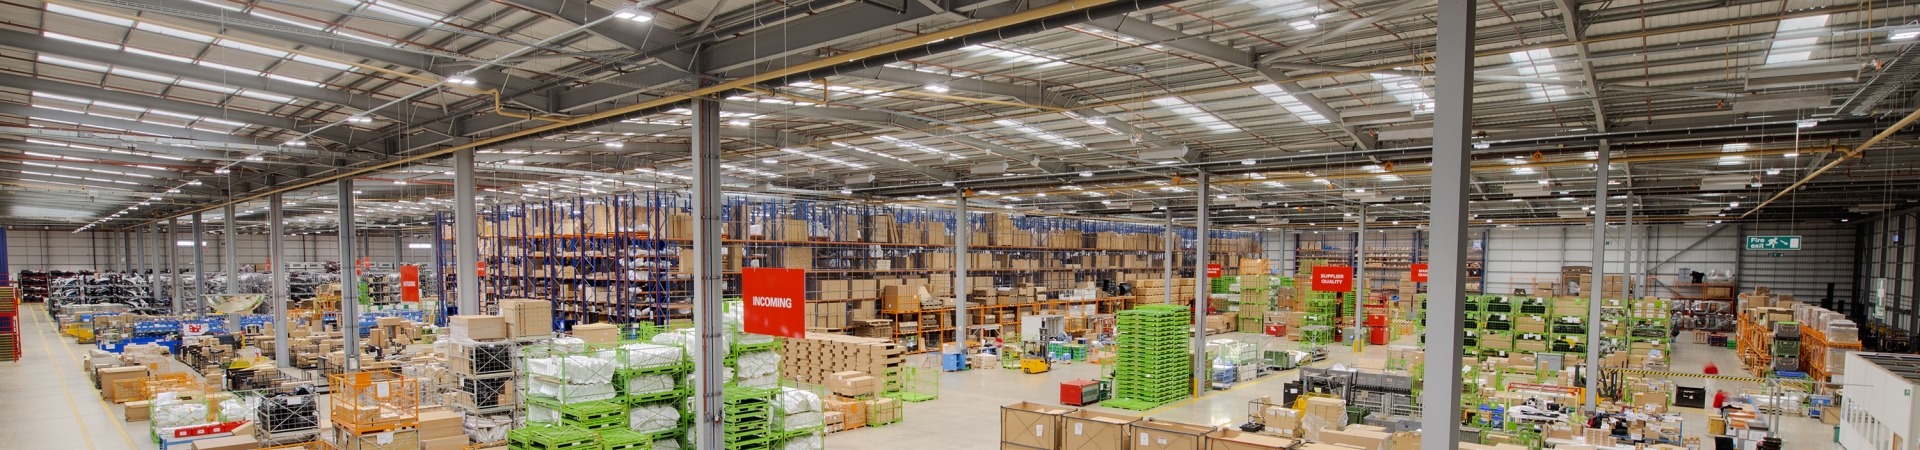 Tamlite Honda Logistics Swindon Industrial and Warehousing Case Study header